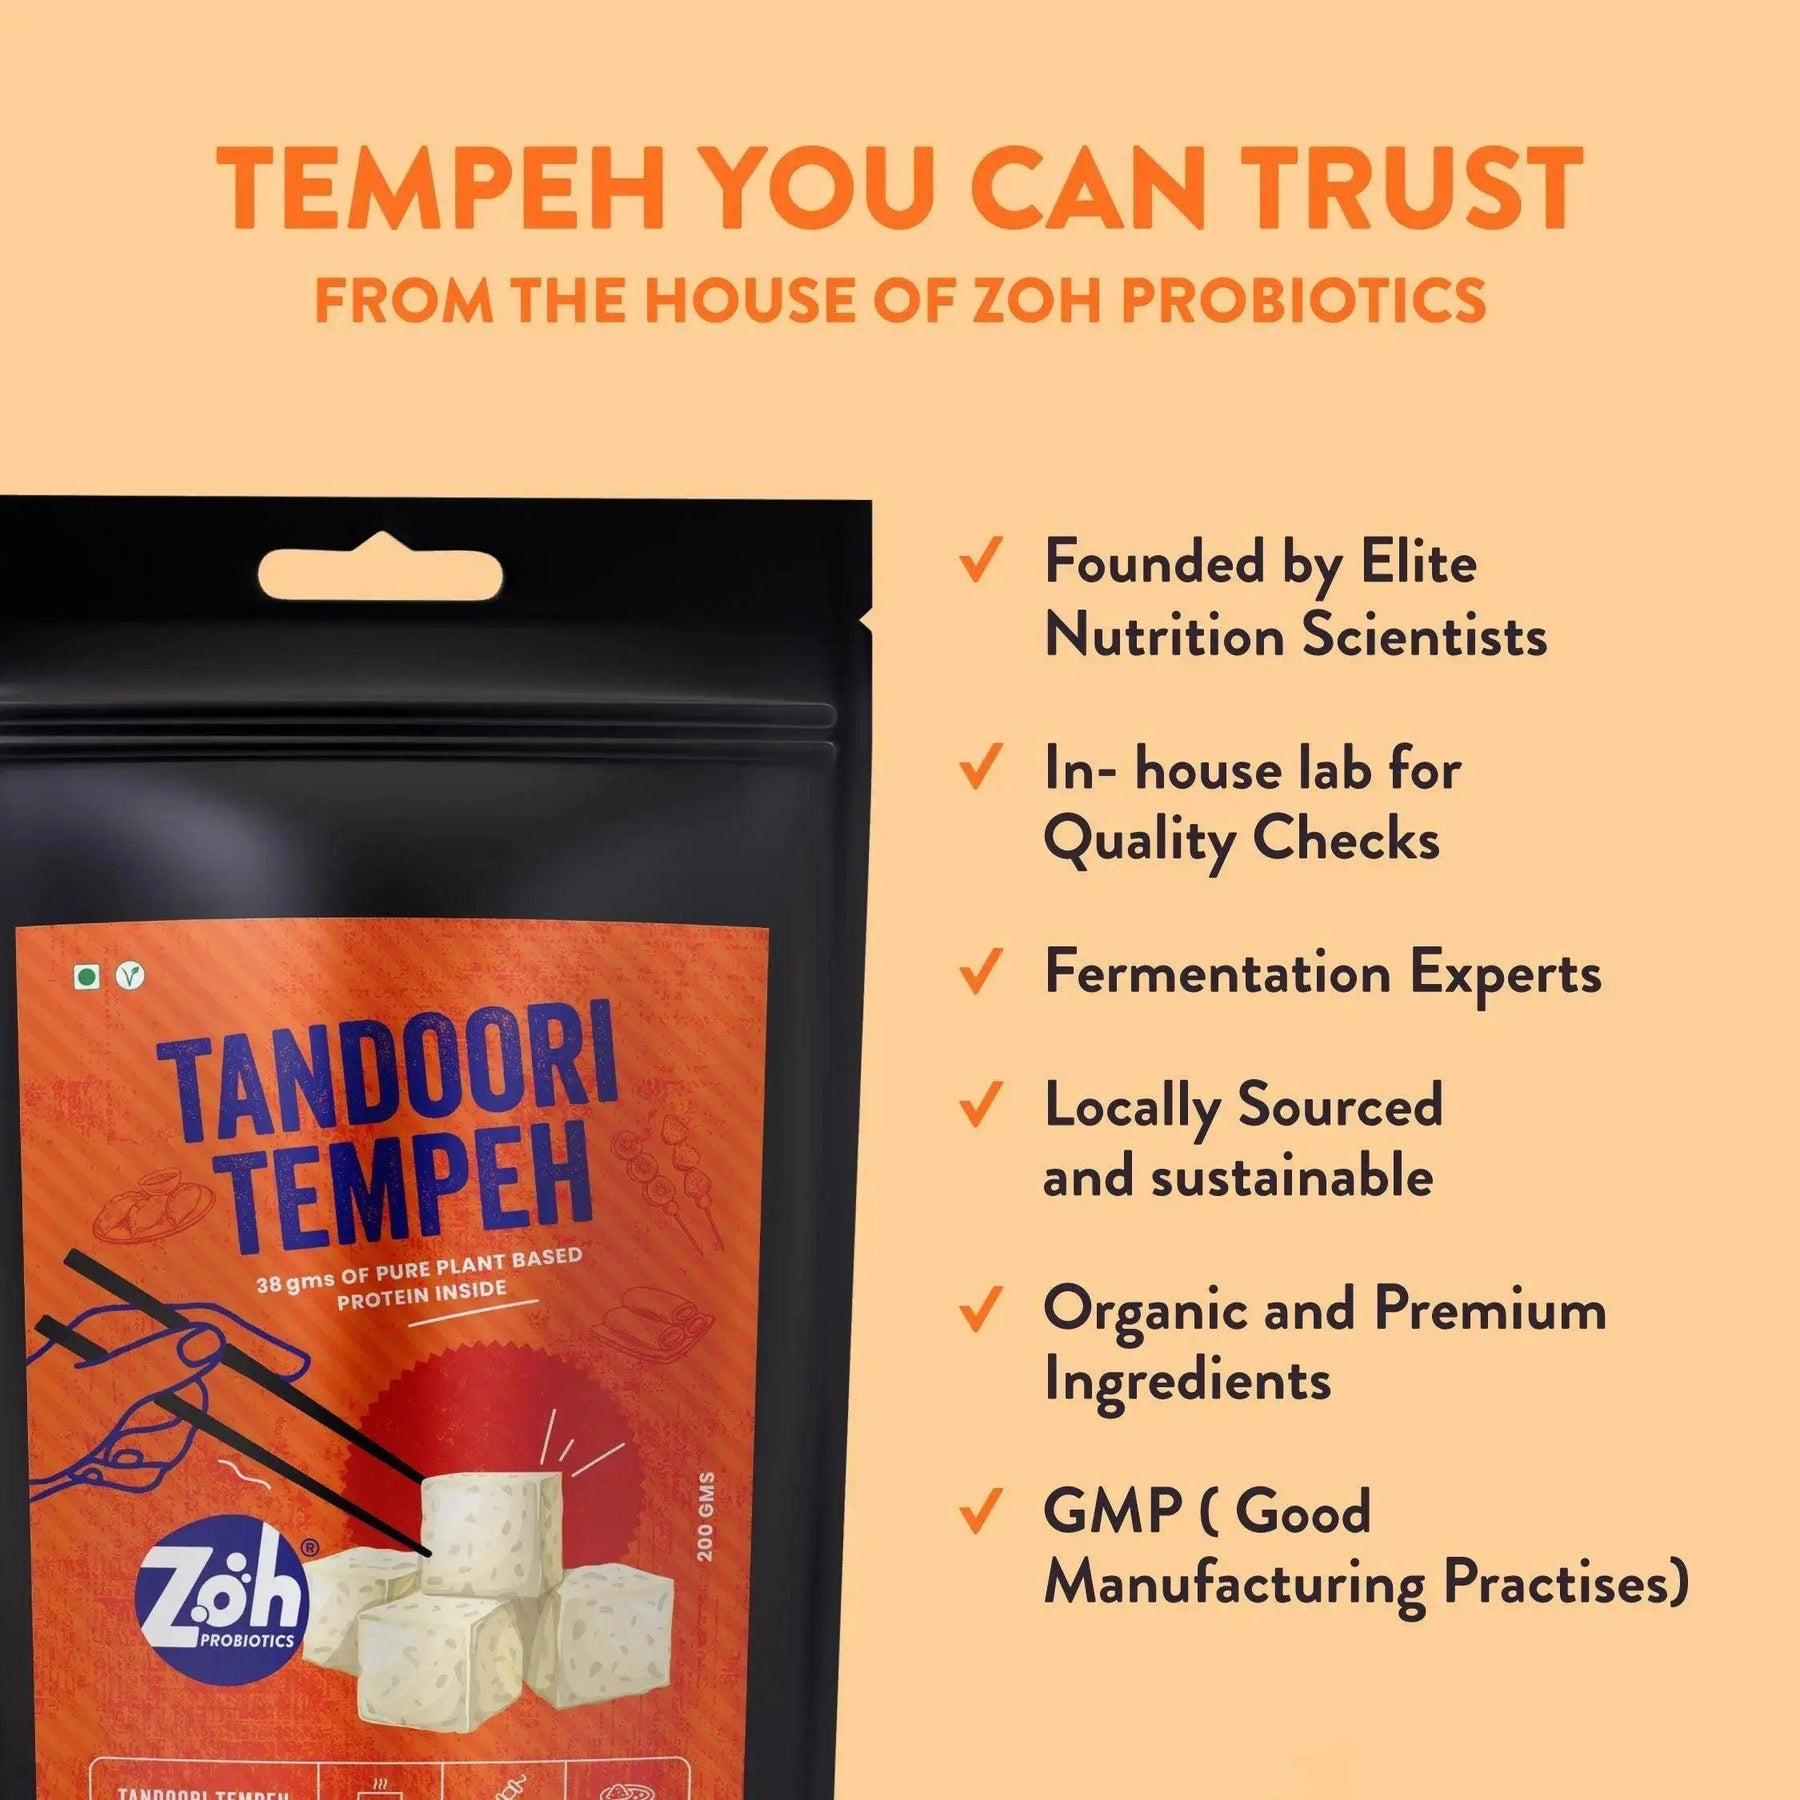 Bulk tempeh in Mumbai: Trustworthy Zoh Tandoori, Nutritionist-founded, Organic Ingredients, GMP